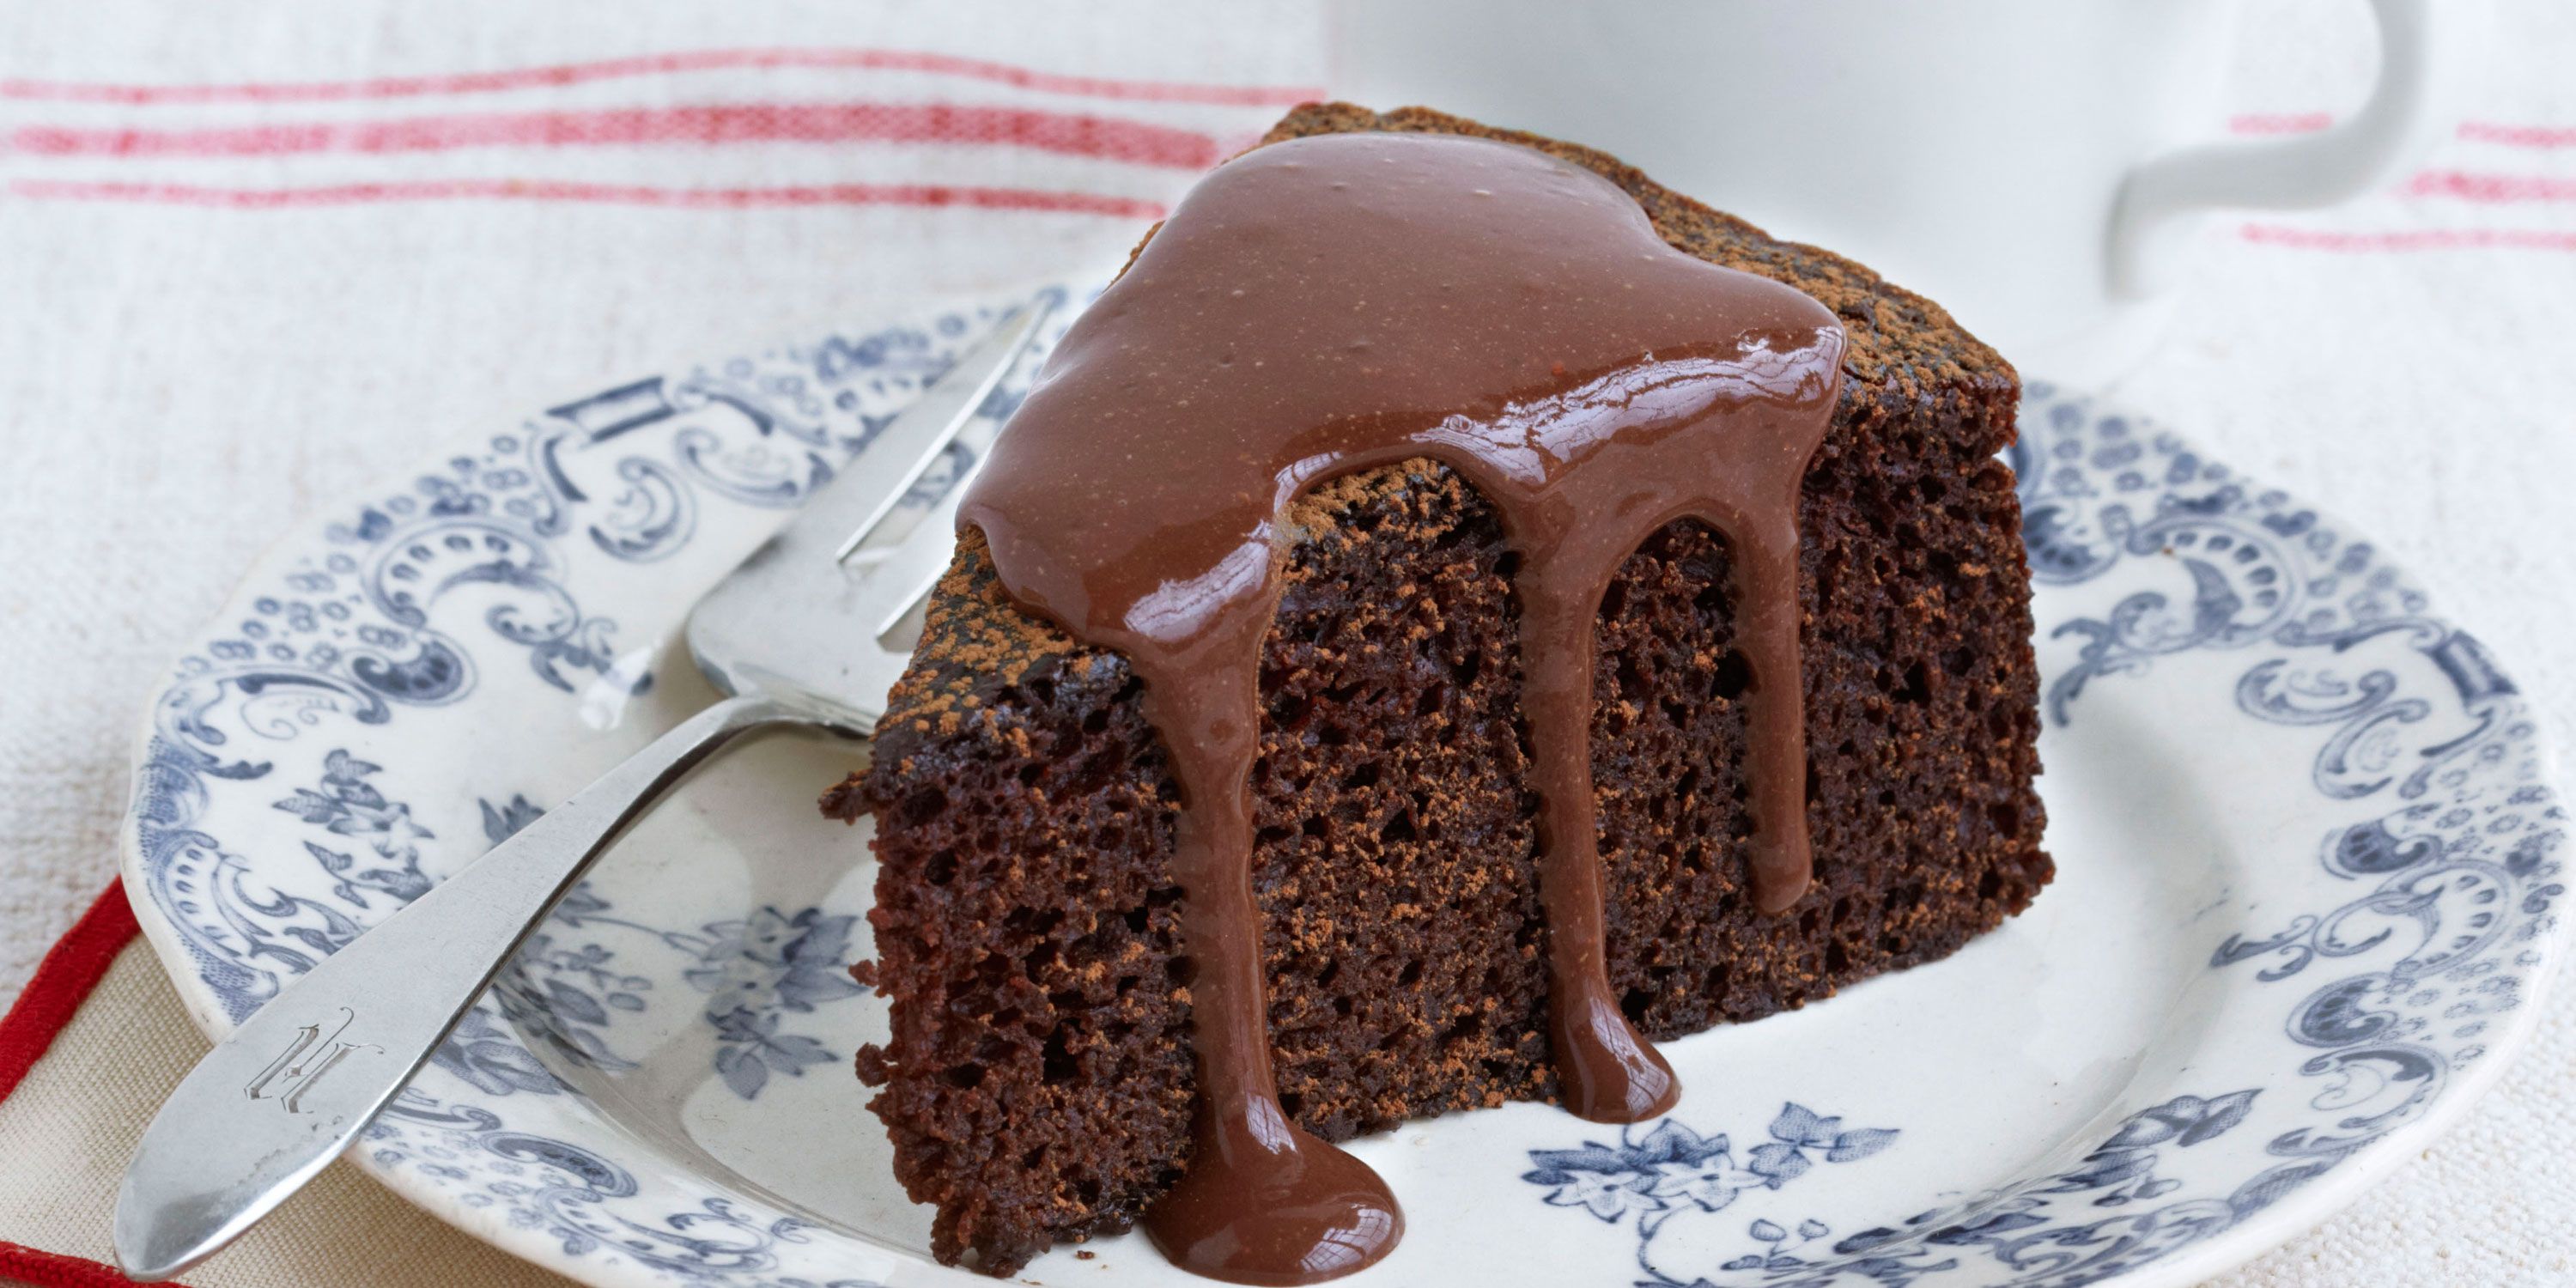 Best Chocolate Cake Recipe | Chef Dennis